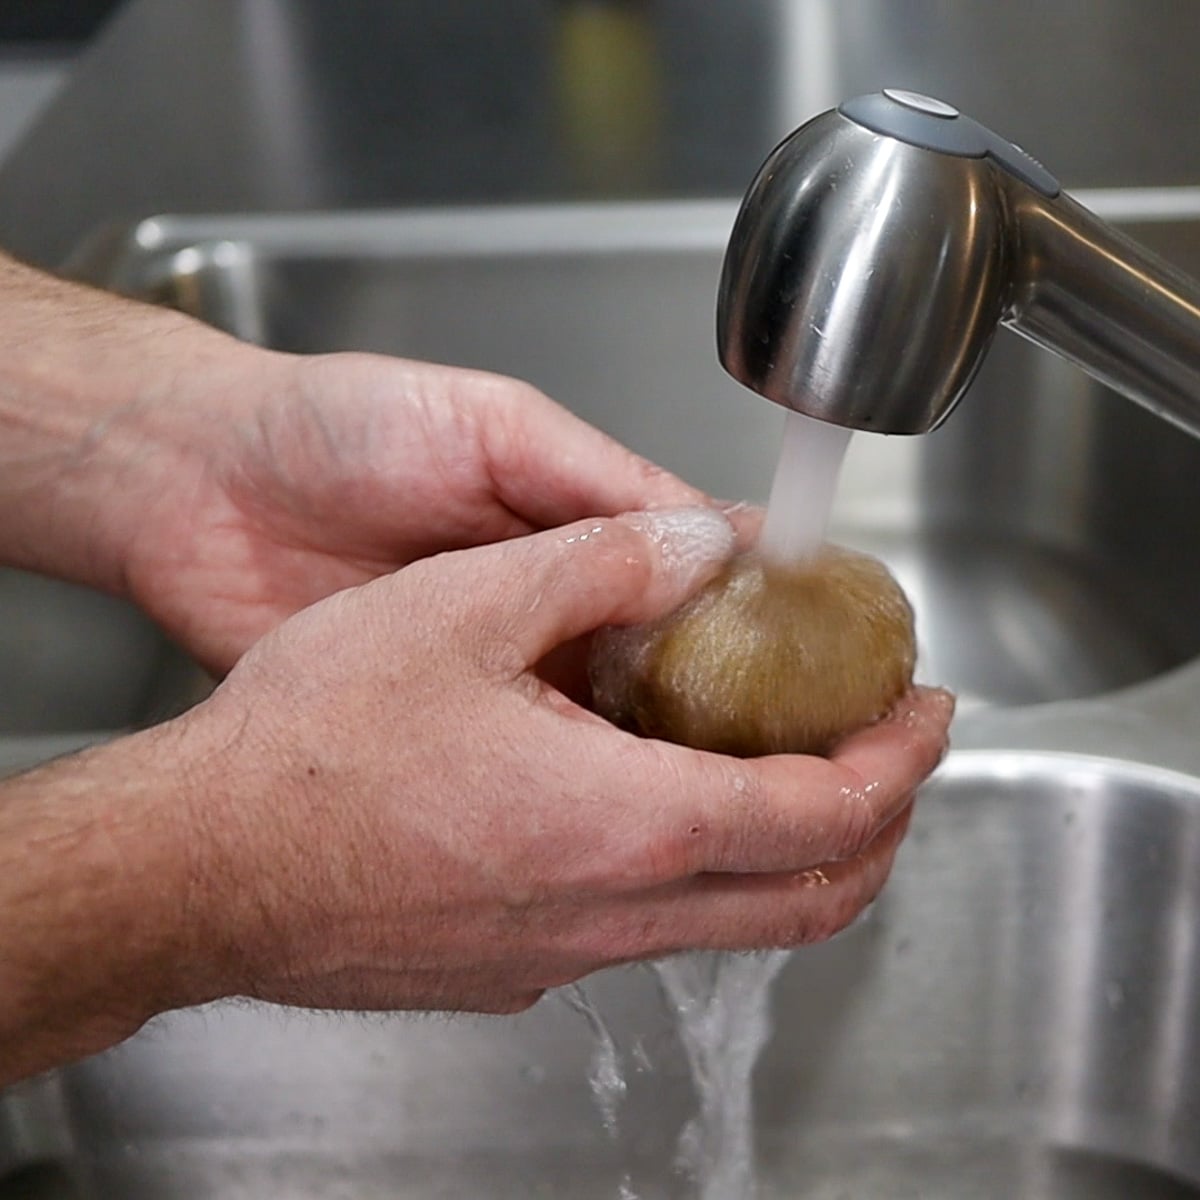 a kiwi fruit being washed